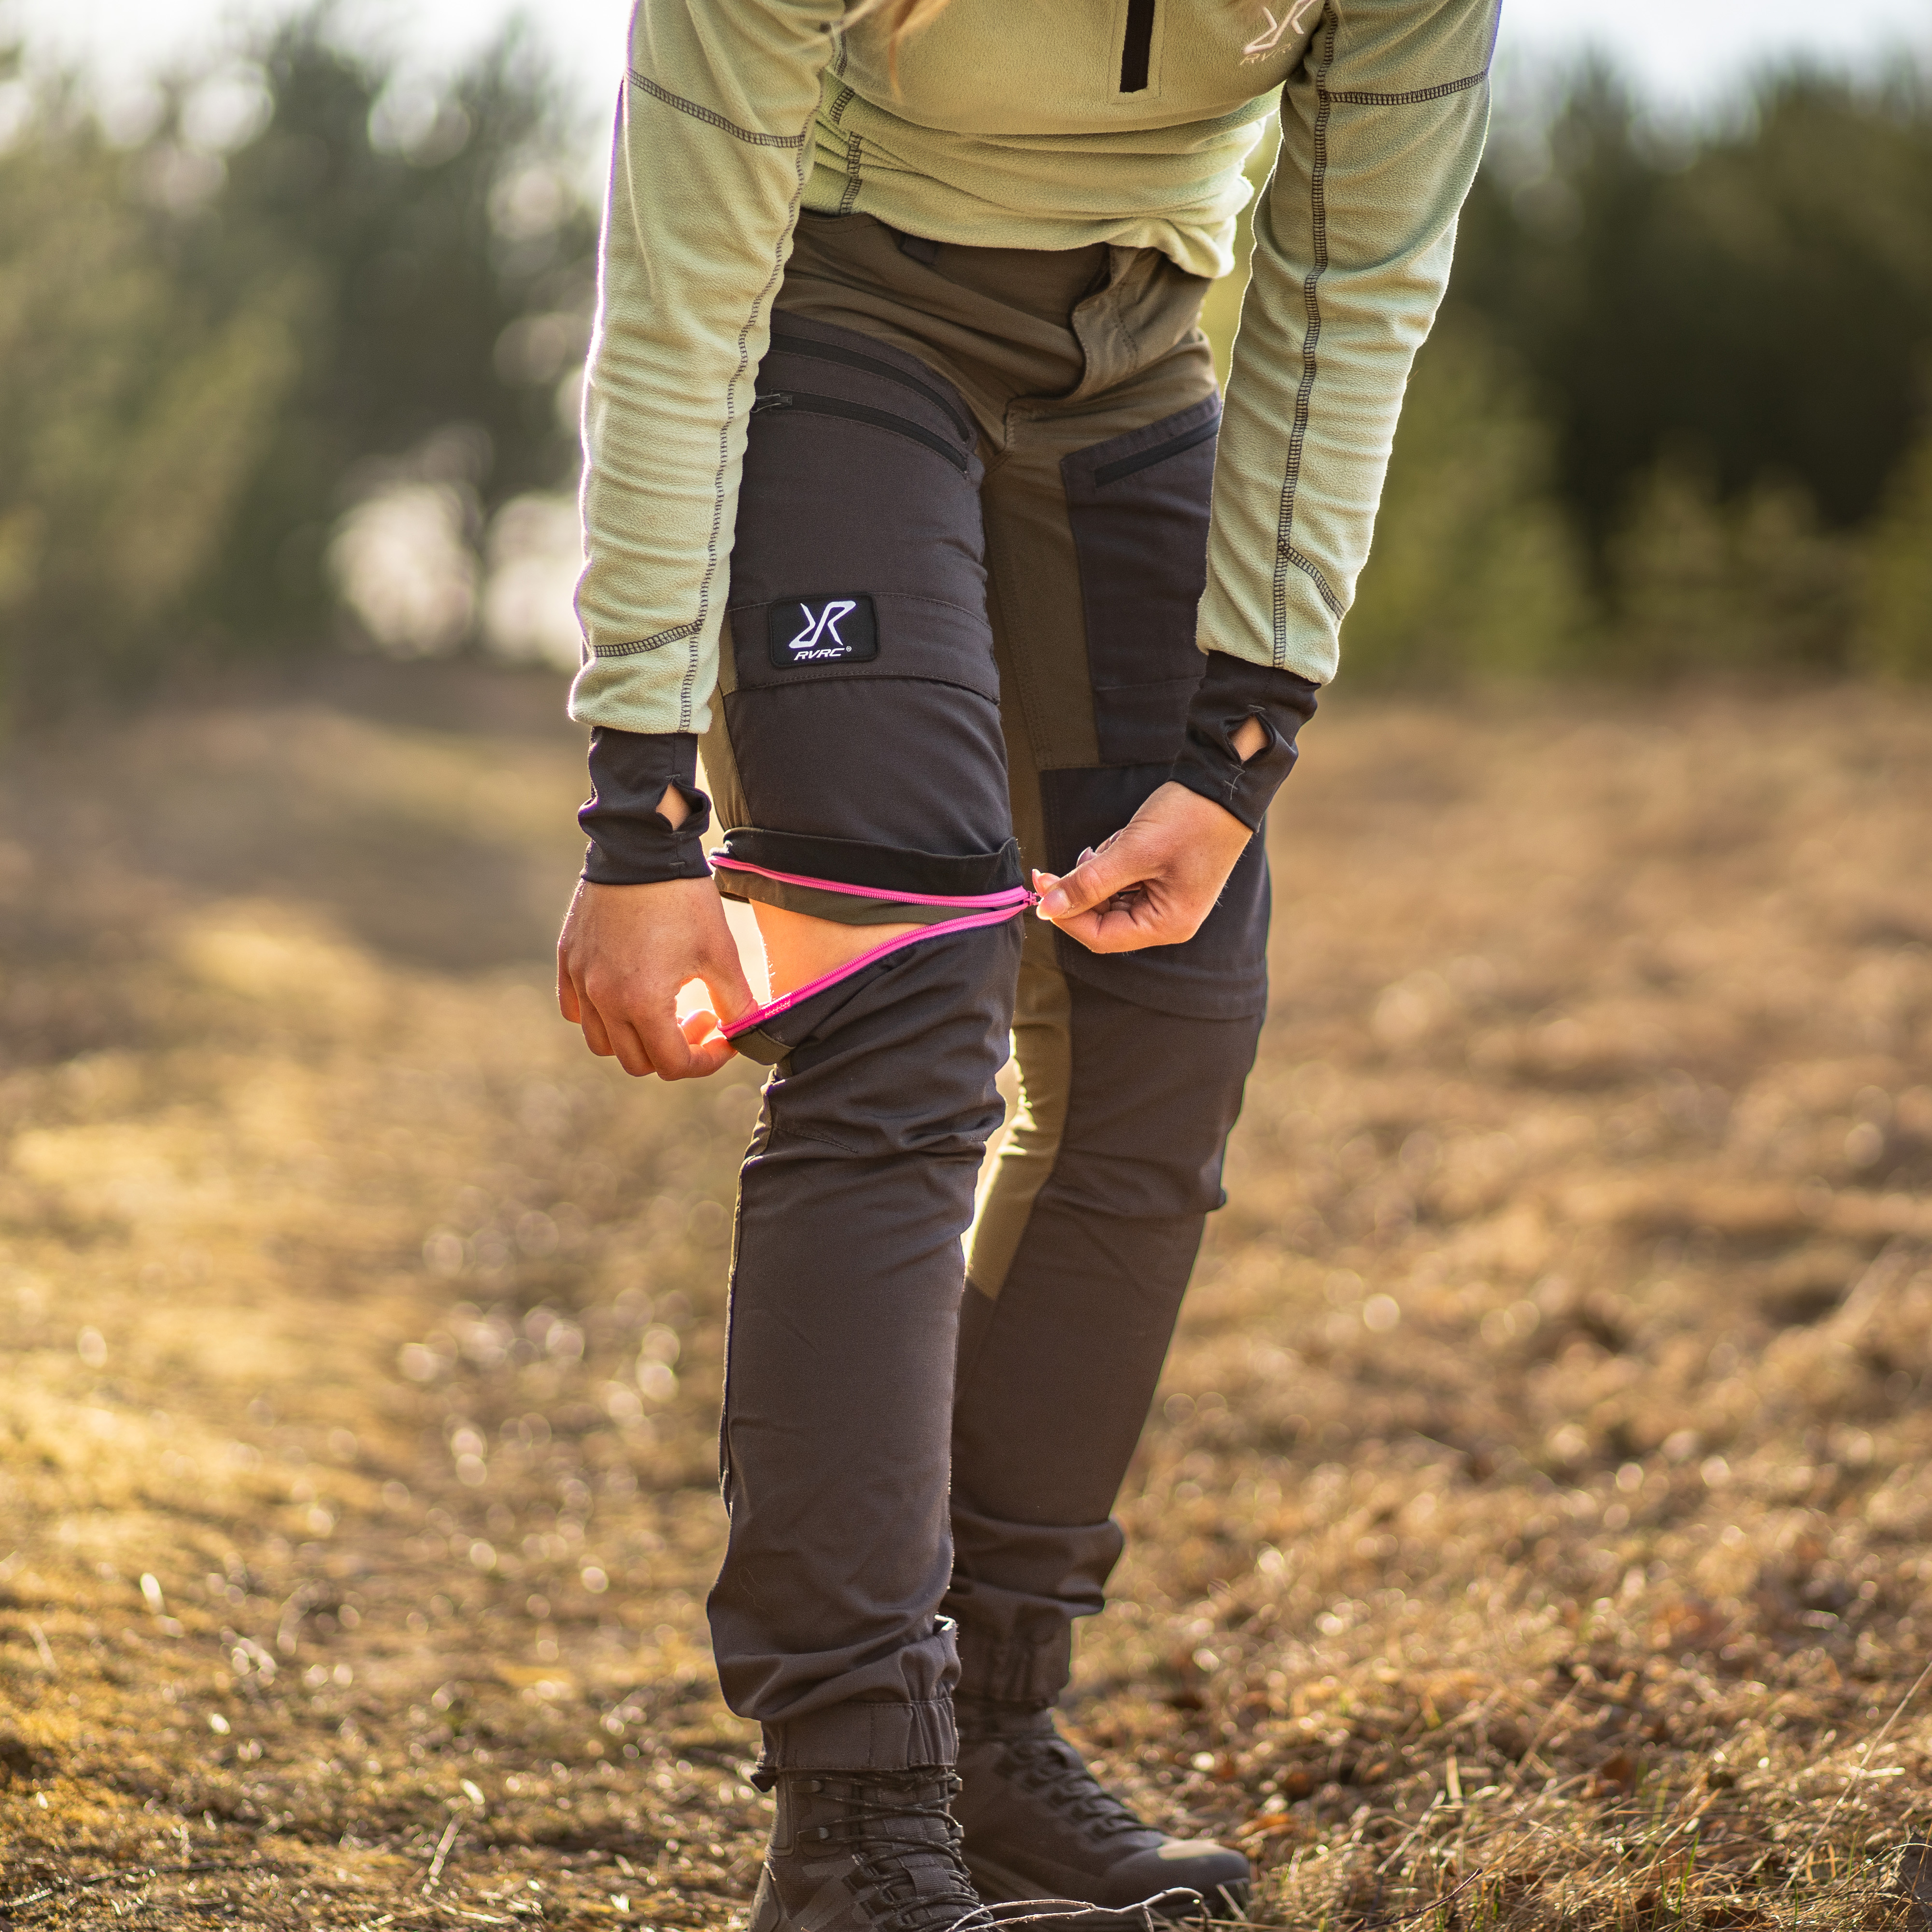 Rdruko Women's Hiking Cargo Pants Water-Resistant Quick Dry UPF 50+ Travel  Camping Work Pants Zipper Pockets